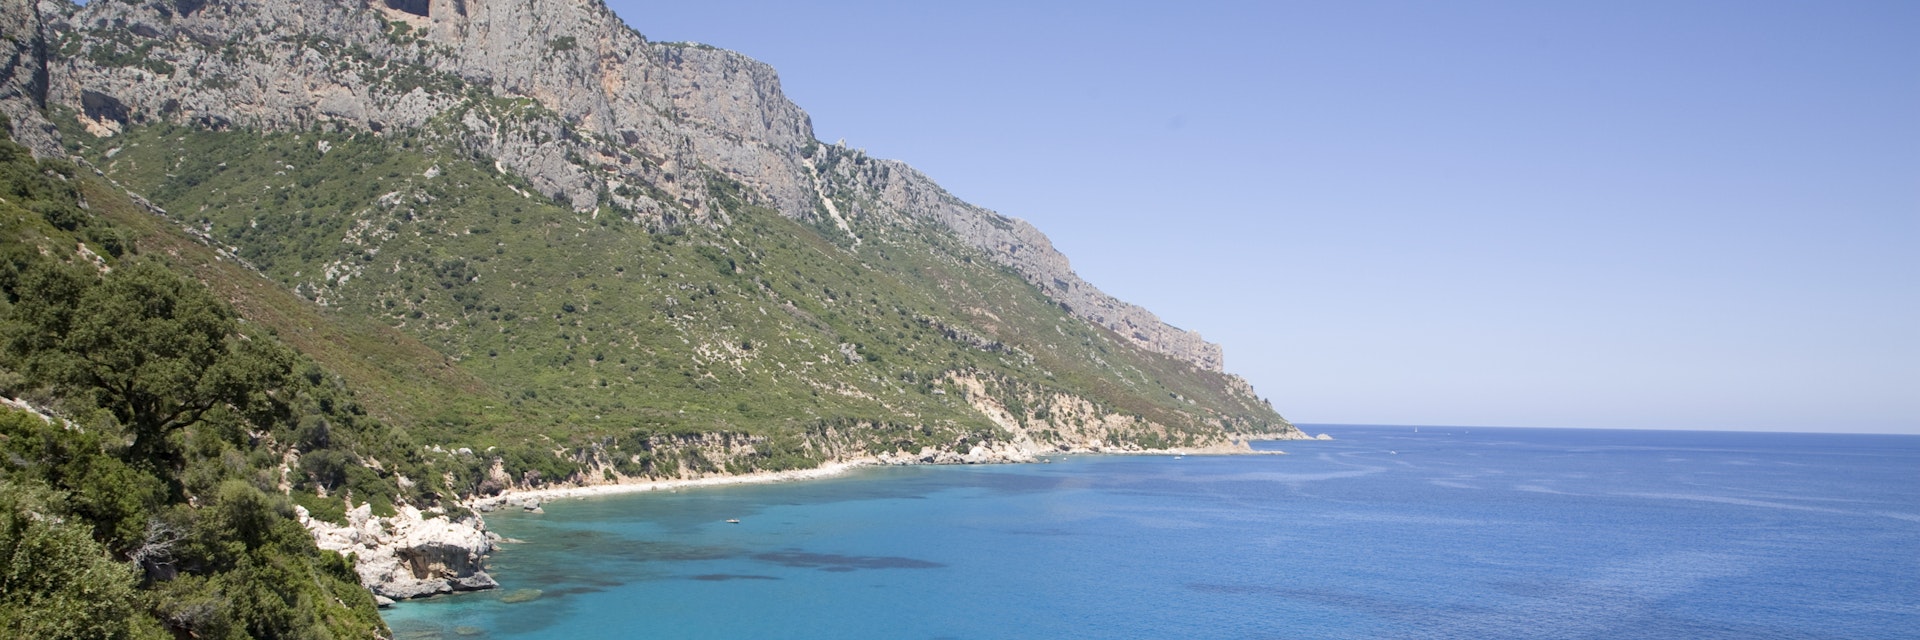 The Gulf of Orosei, near Santa Maria Navarrese, Sardinia, Italy, Mediterranean, Europe